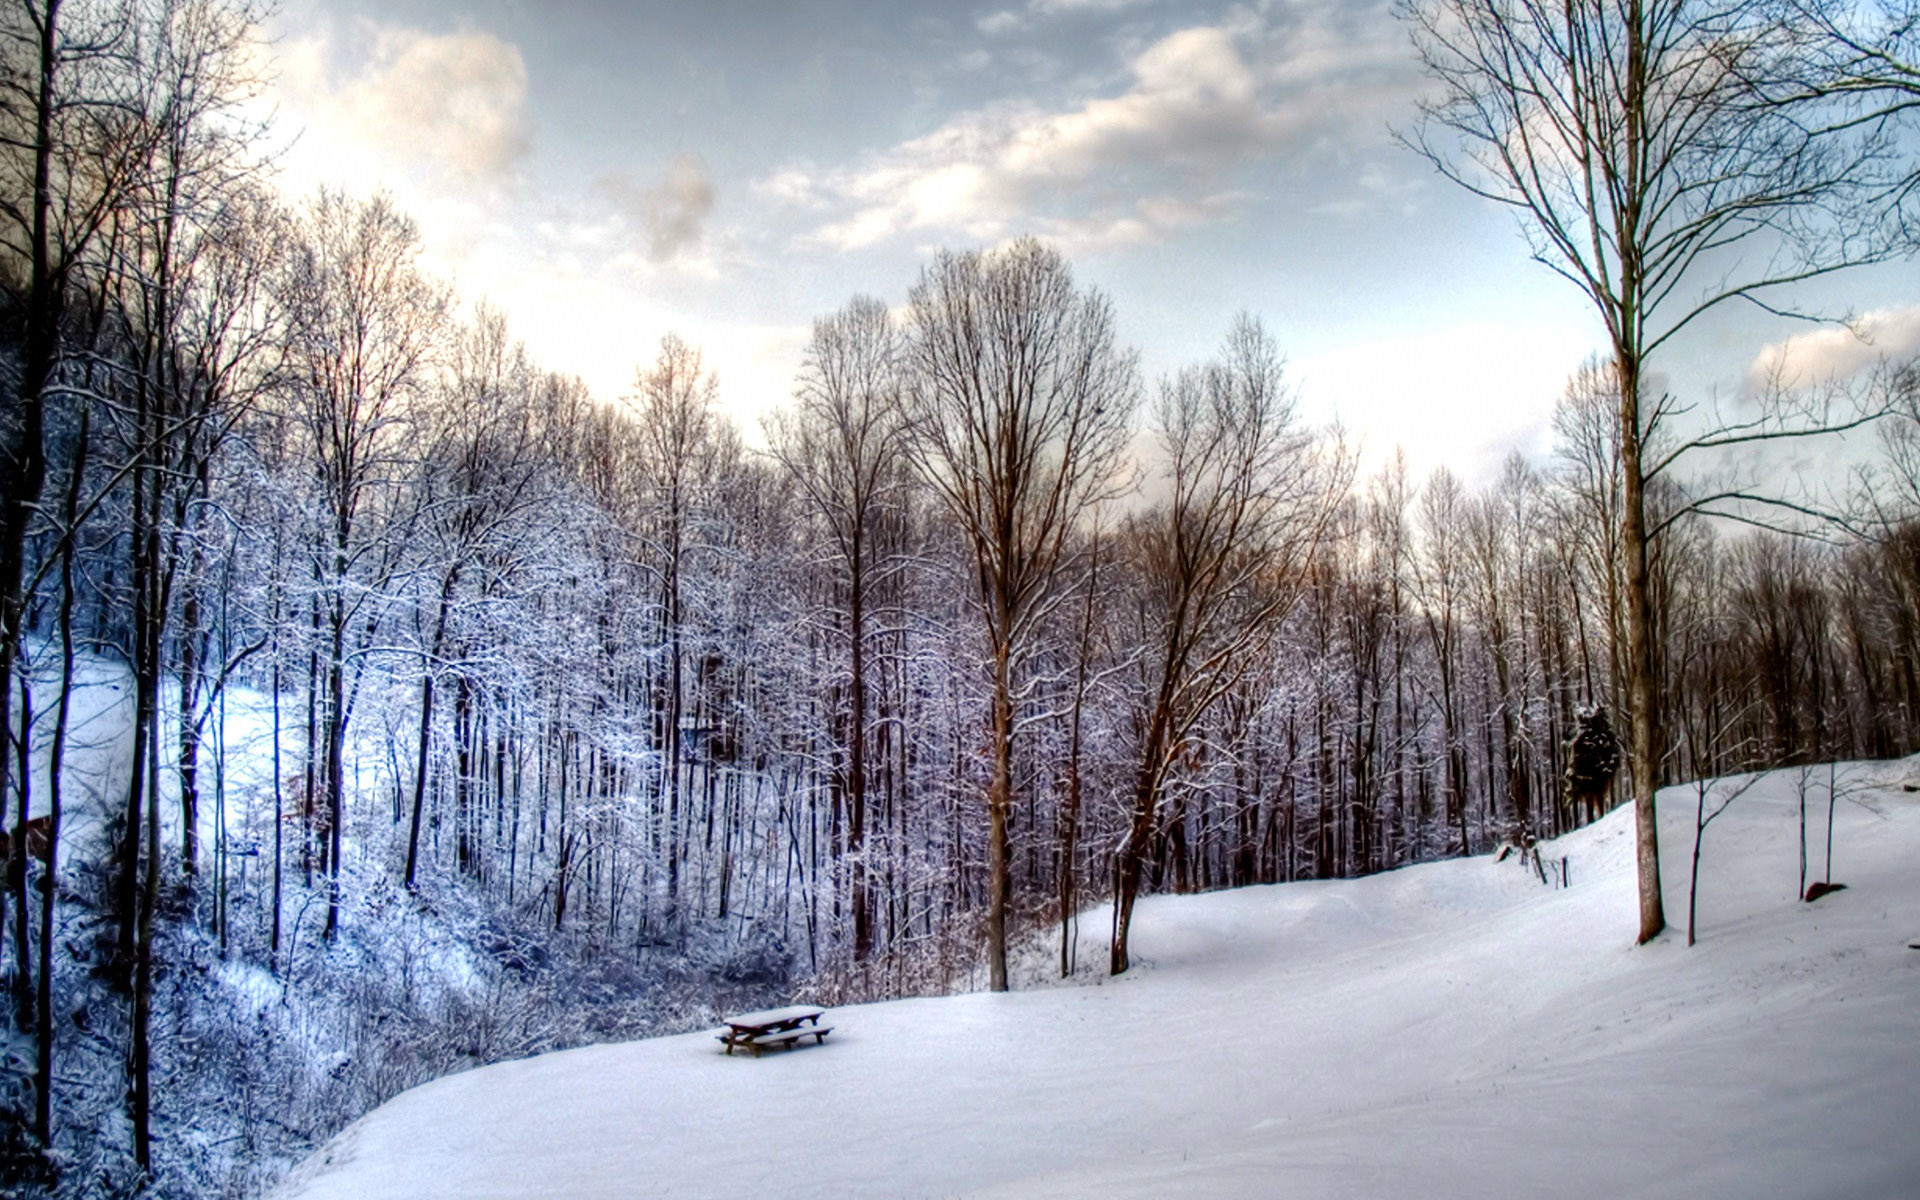 19201200 Widescreen Winter Snow Scenes – Dreamy Winter Snow Wallpaper